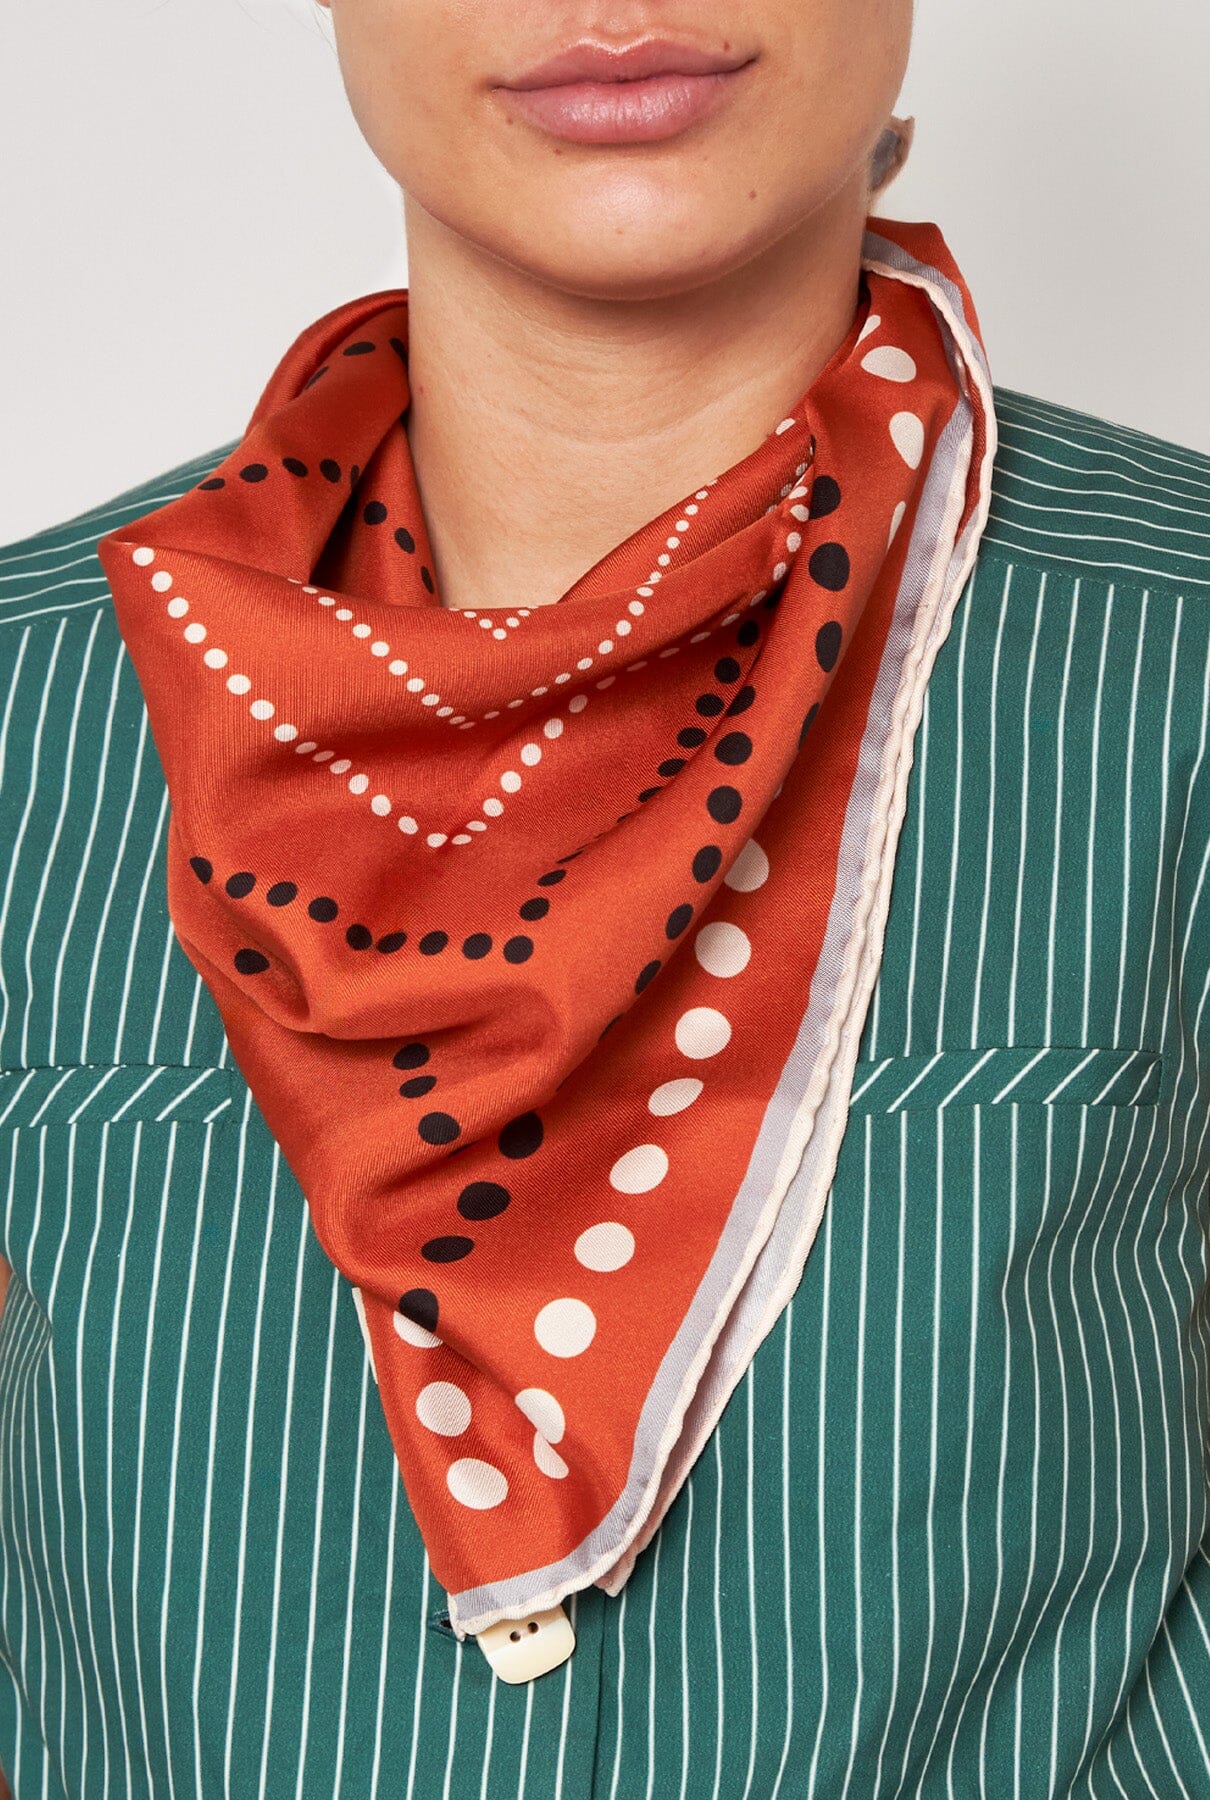 Mini-dot scarf caldera Foulards & Scarves Van Hise 